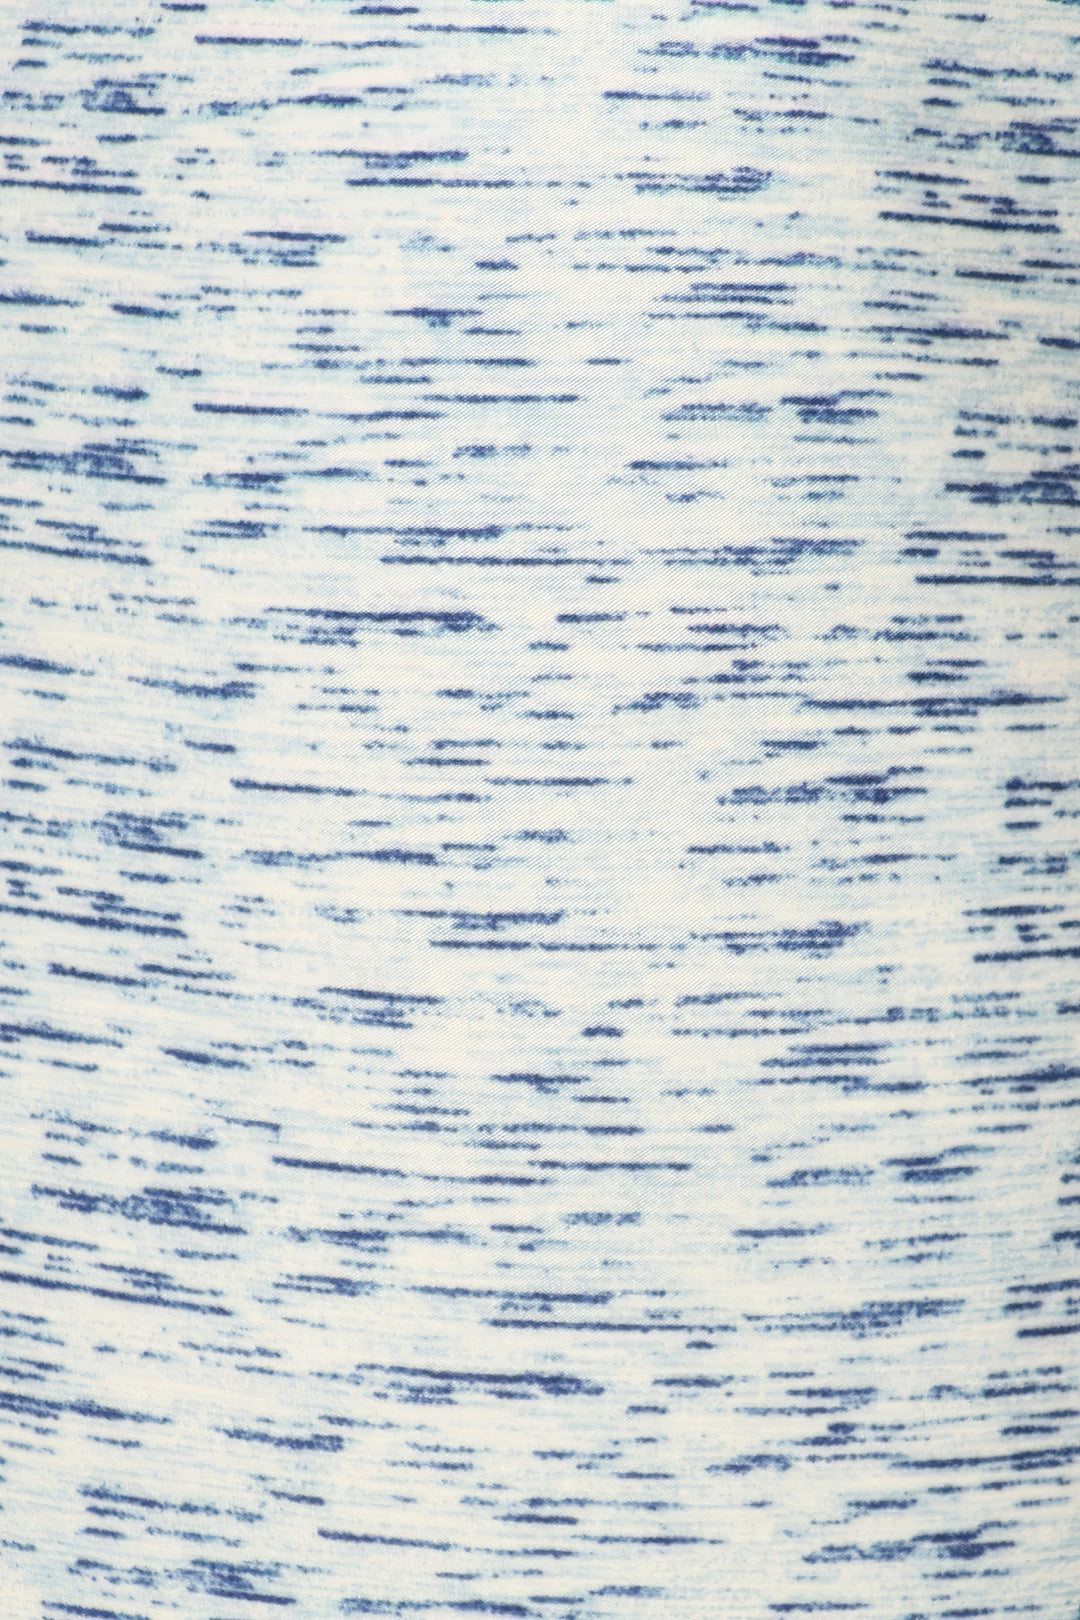 a close up of a blue leggins